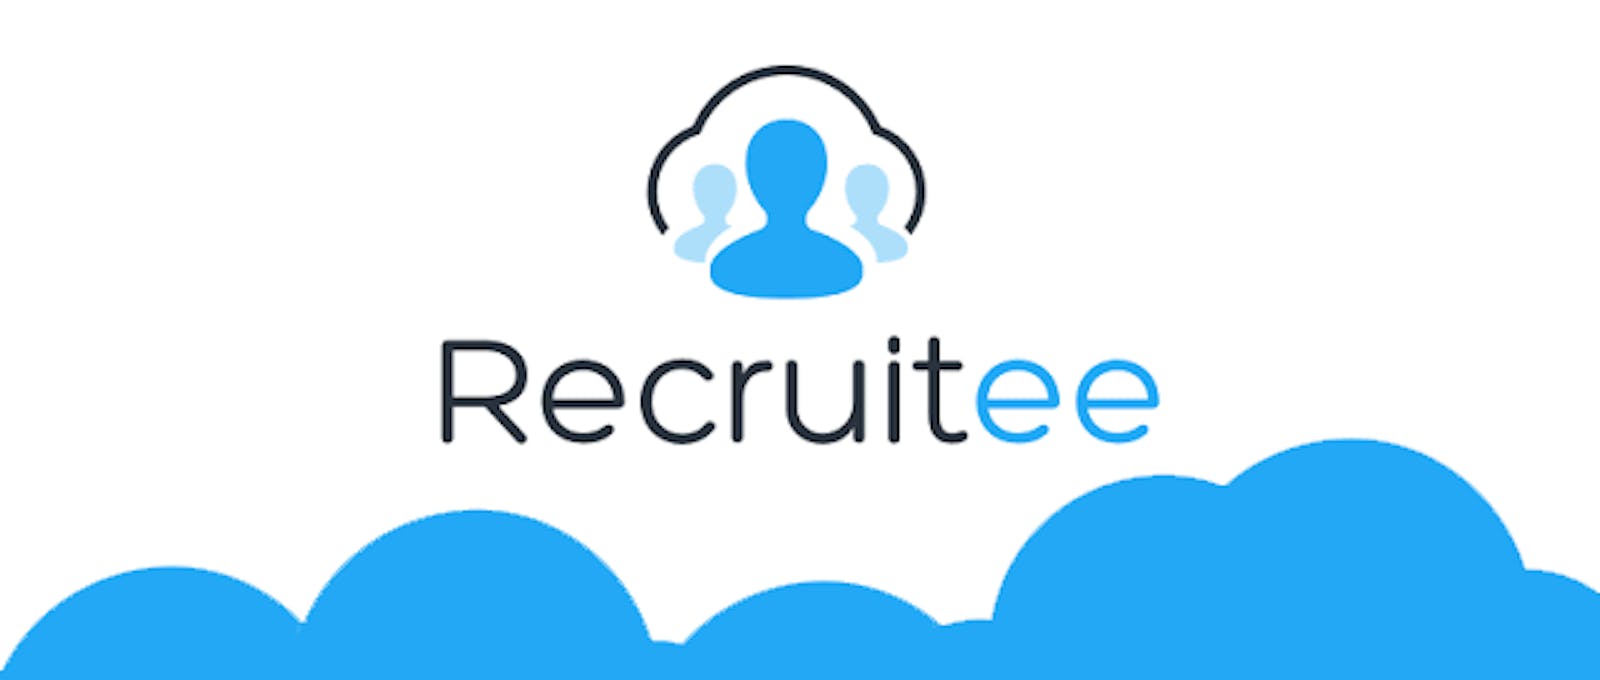 Recruitee: Post A New Job Automatically